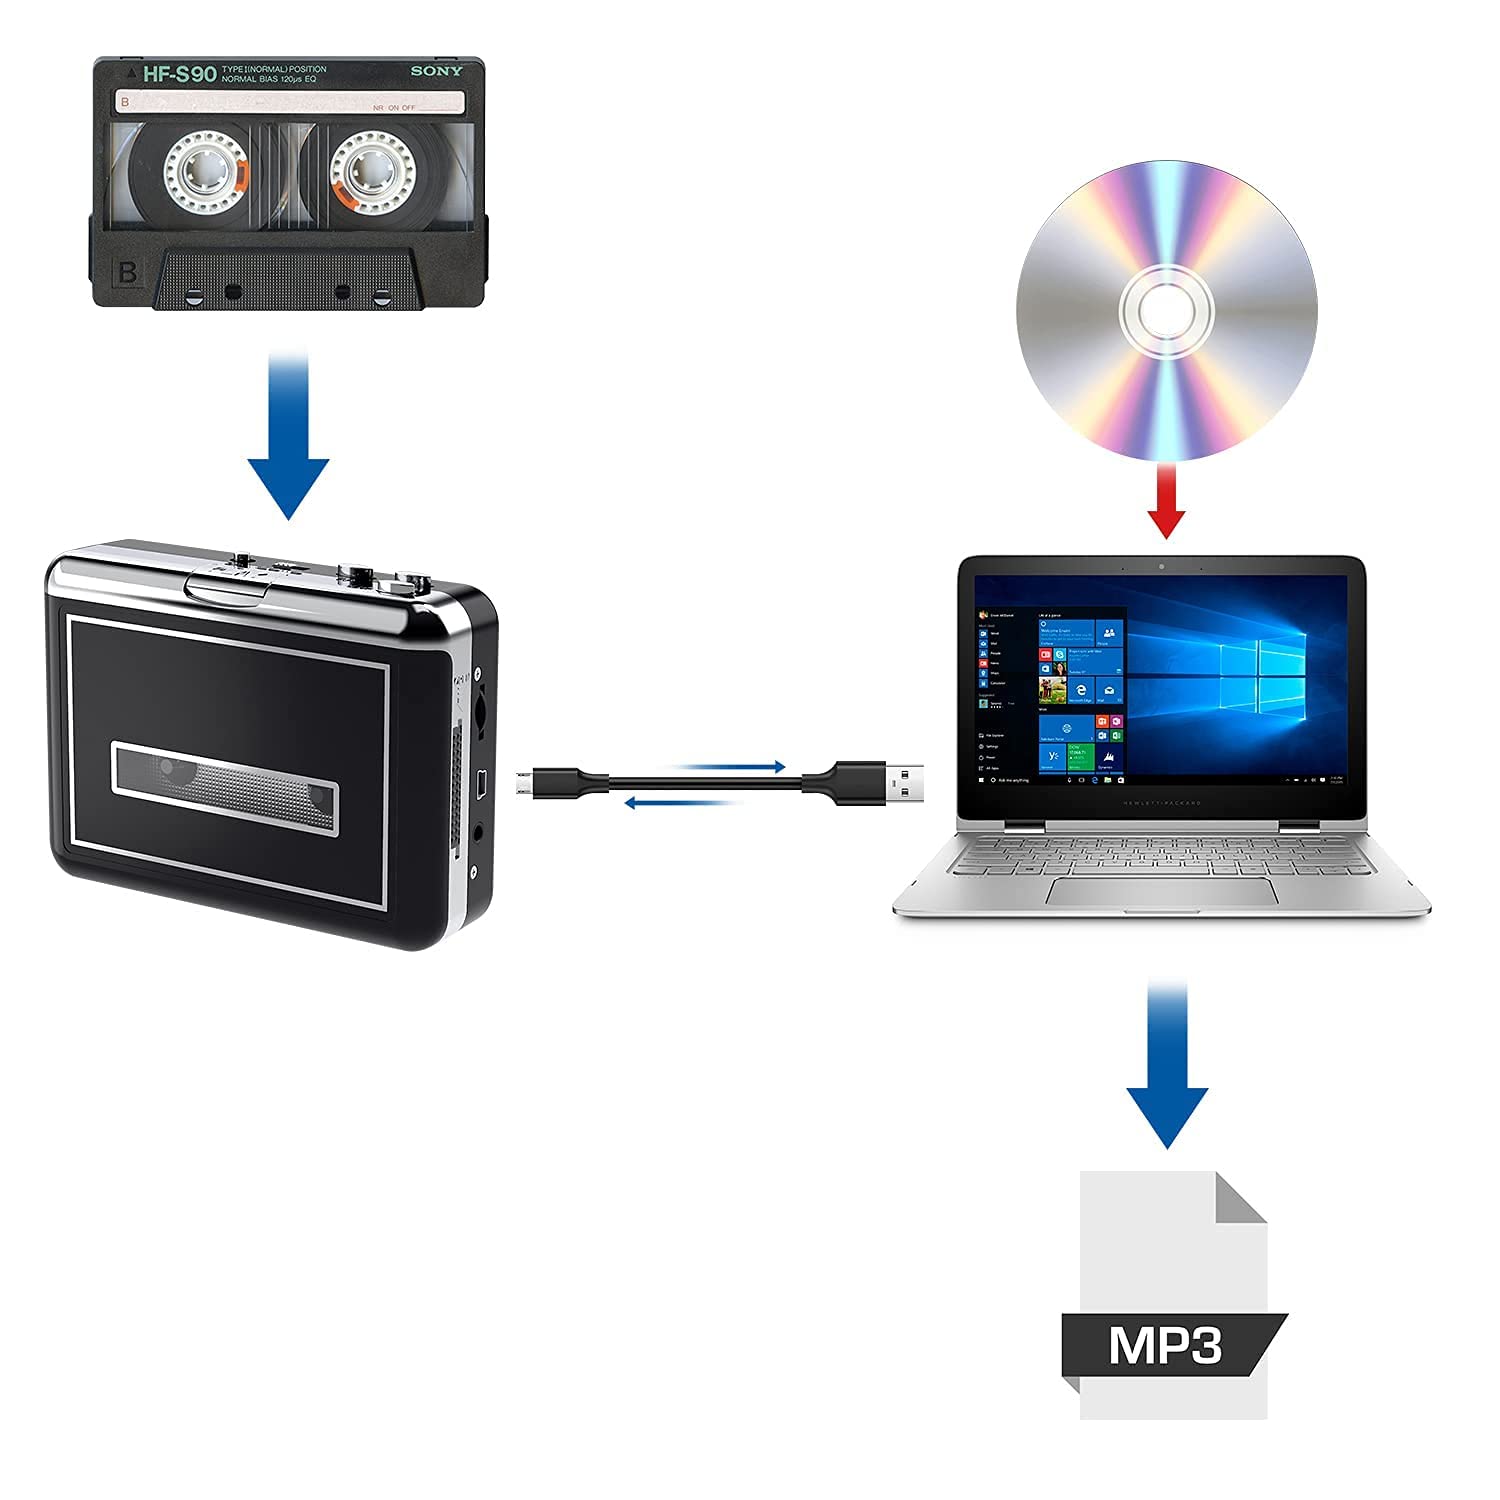 Cassette Player Portable Walkman Convert Tapes to Digital MP3 Converter